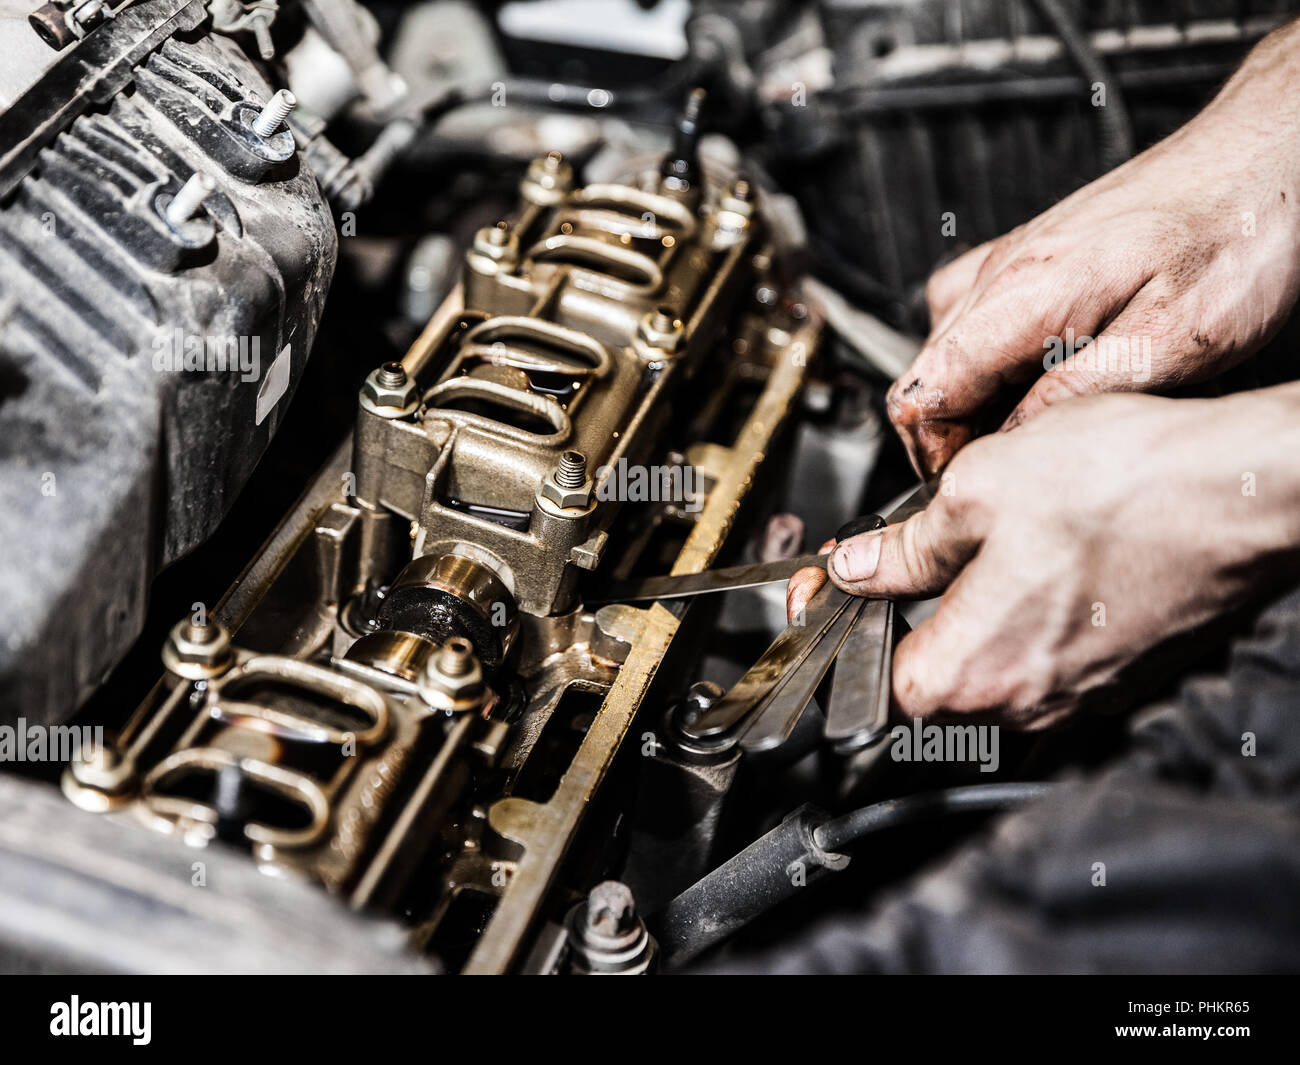 Automobile service worker or garage mechanic repairing auto car engine Stock Photo